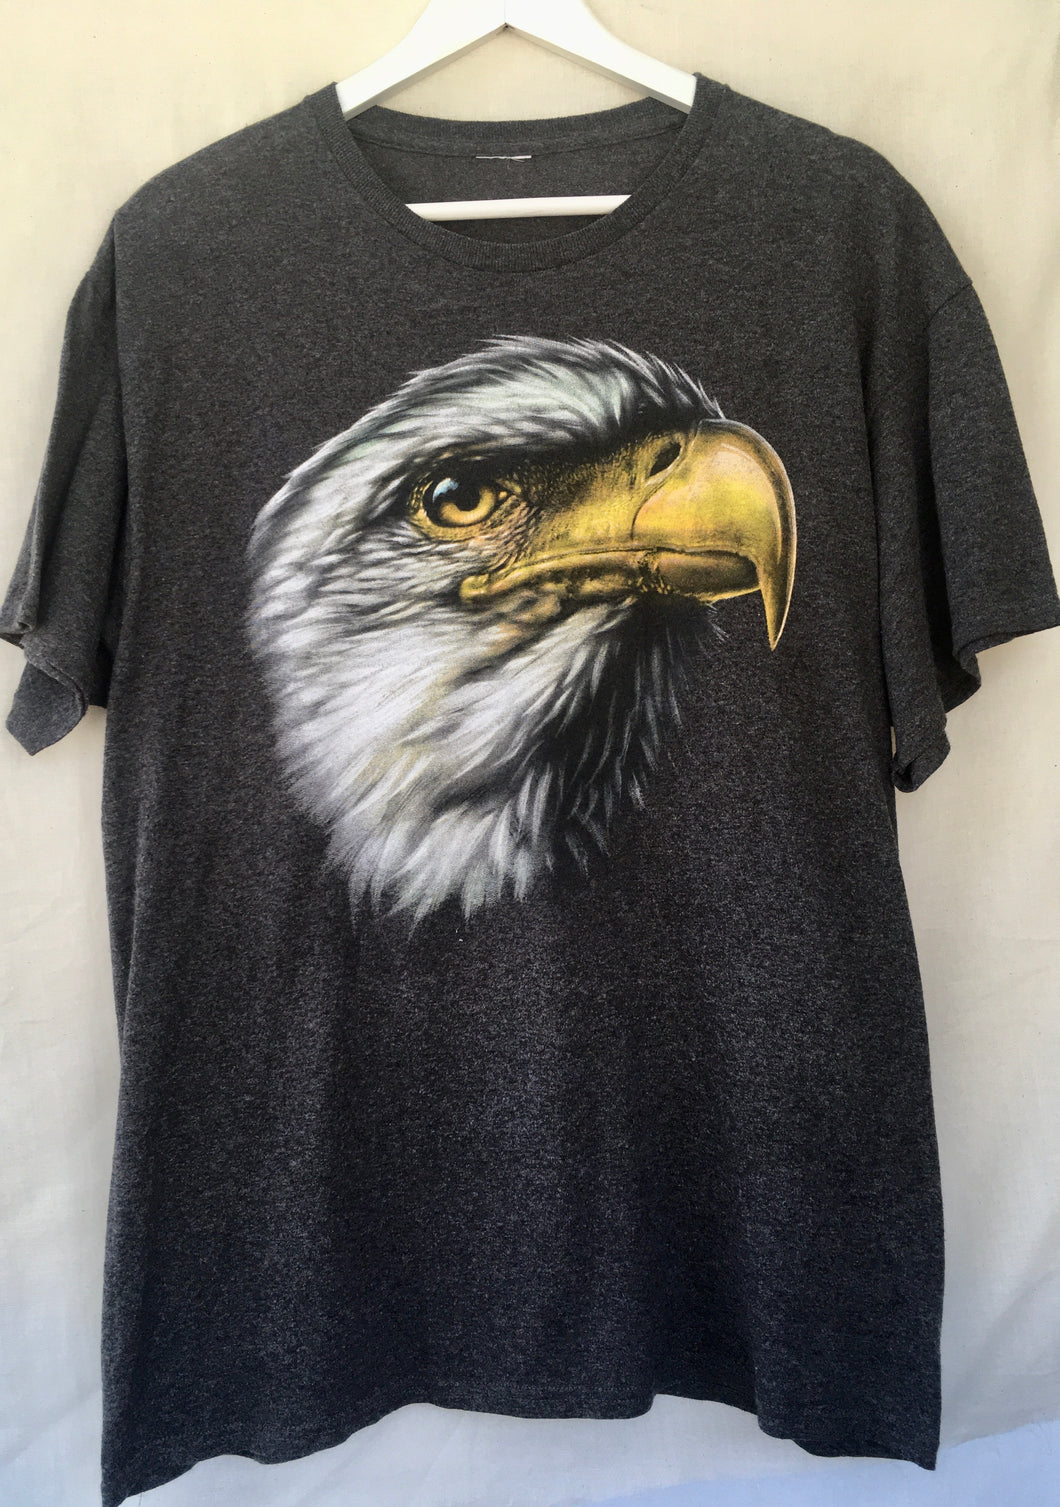 Eagle tee shirt